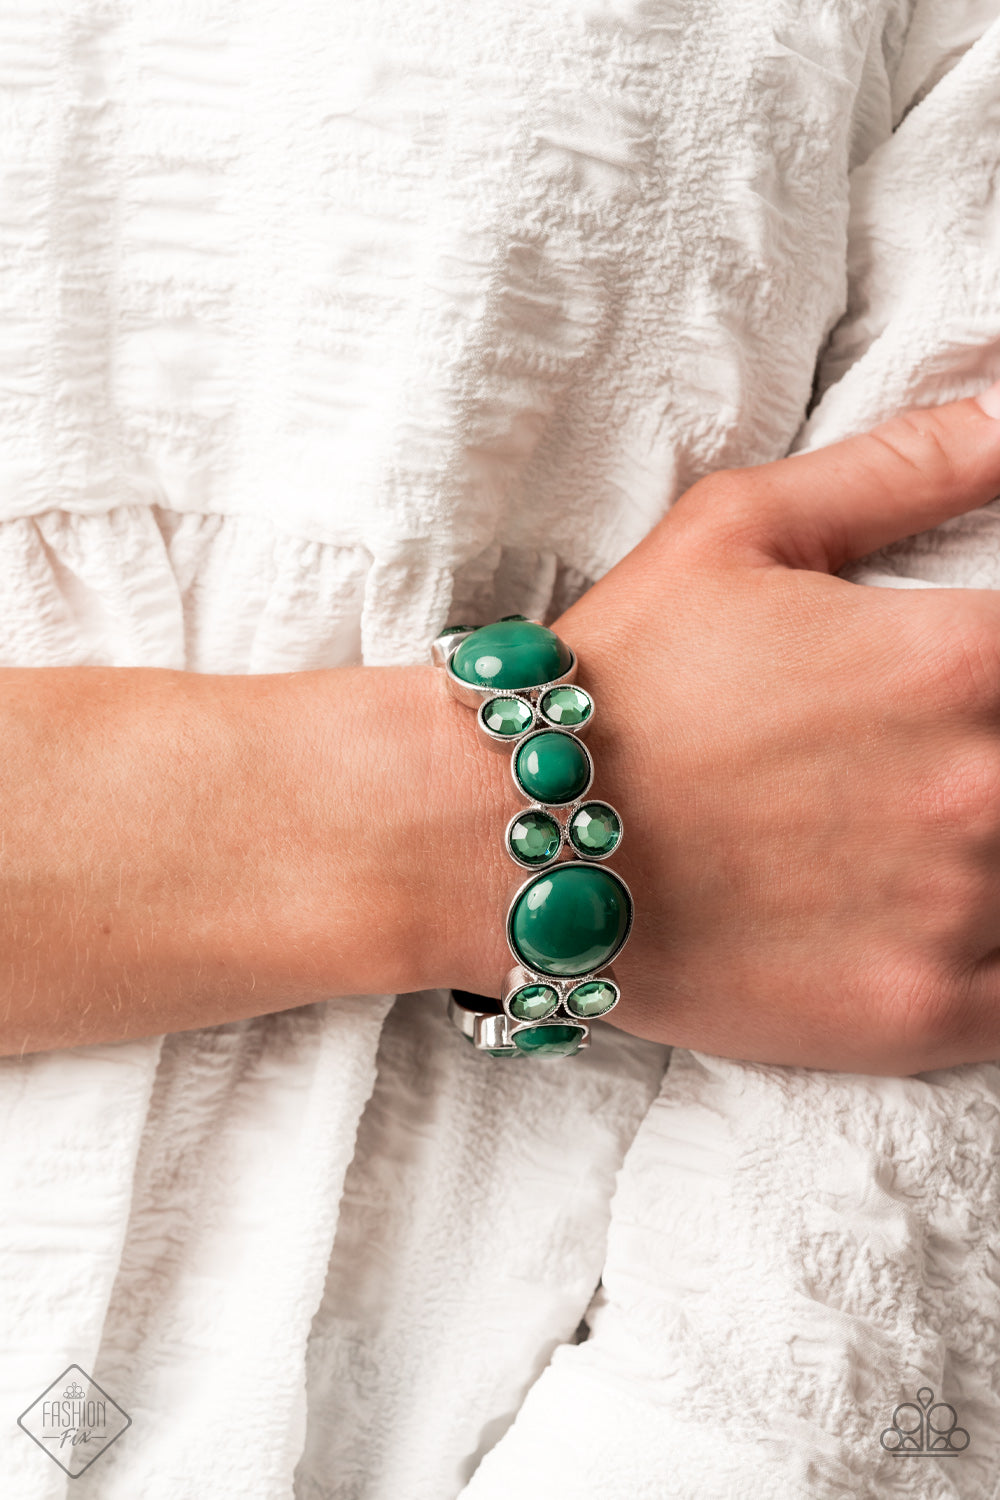 Green Jewelry - Glimpses of Malibu - September's Fashion Fix 2020  Paparazzi jewelry image